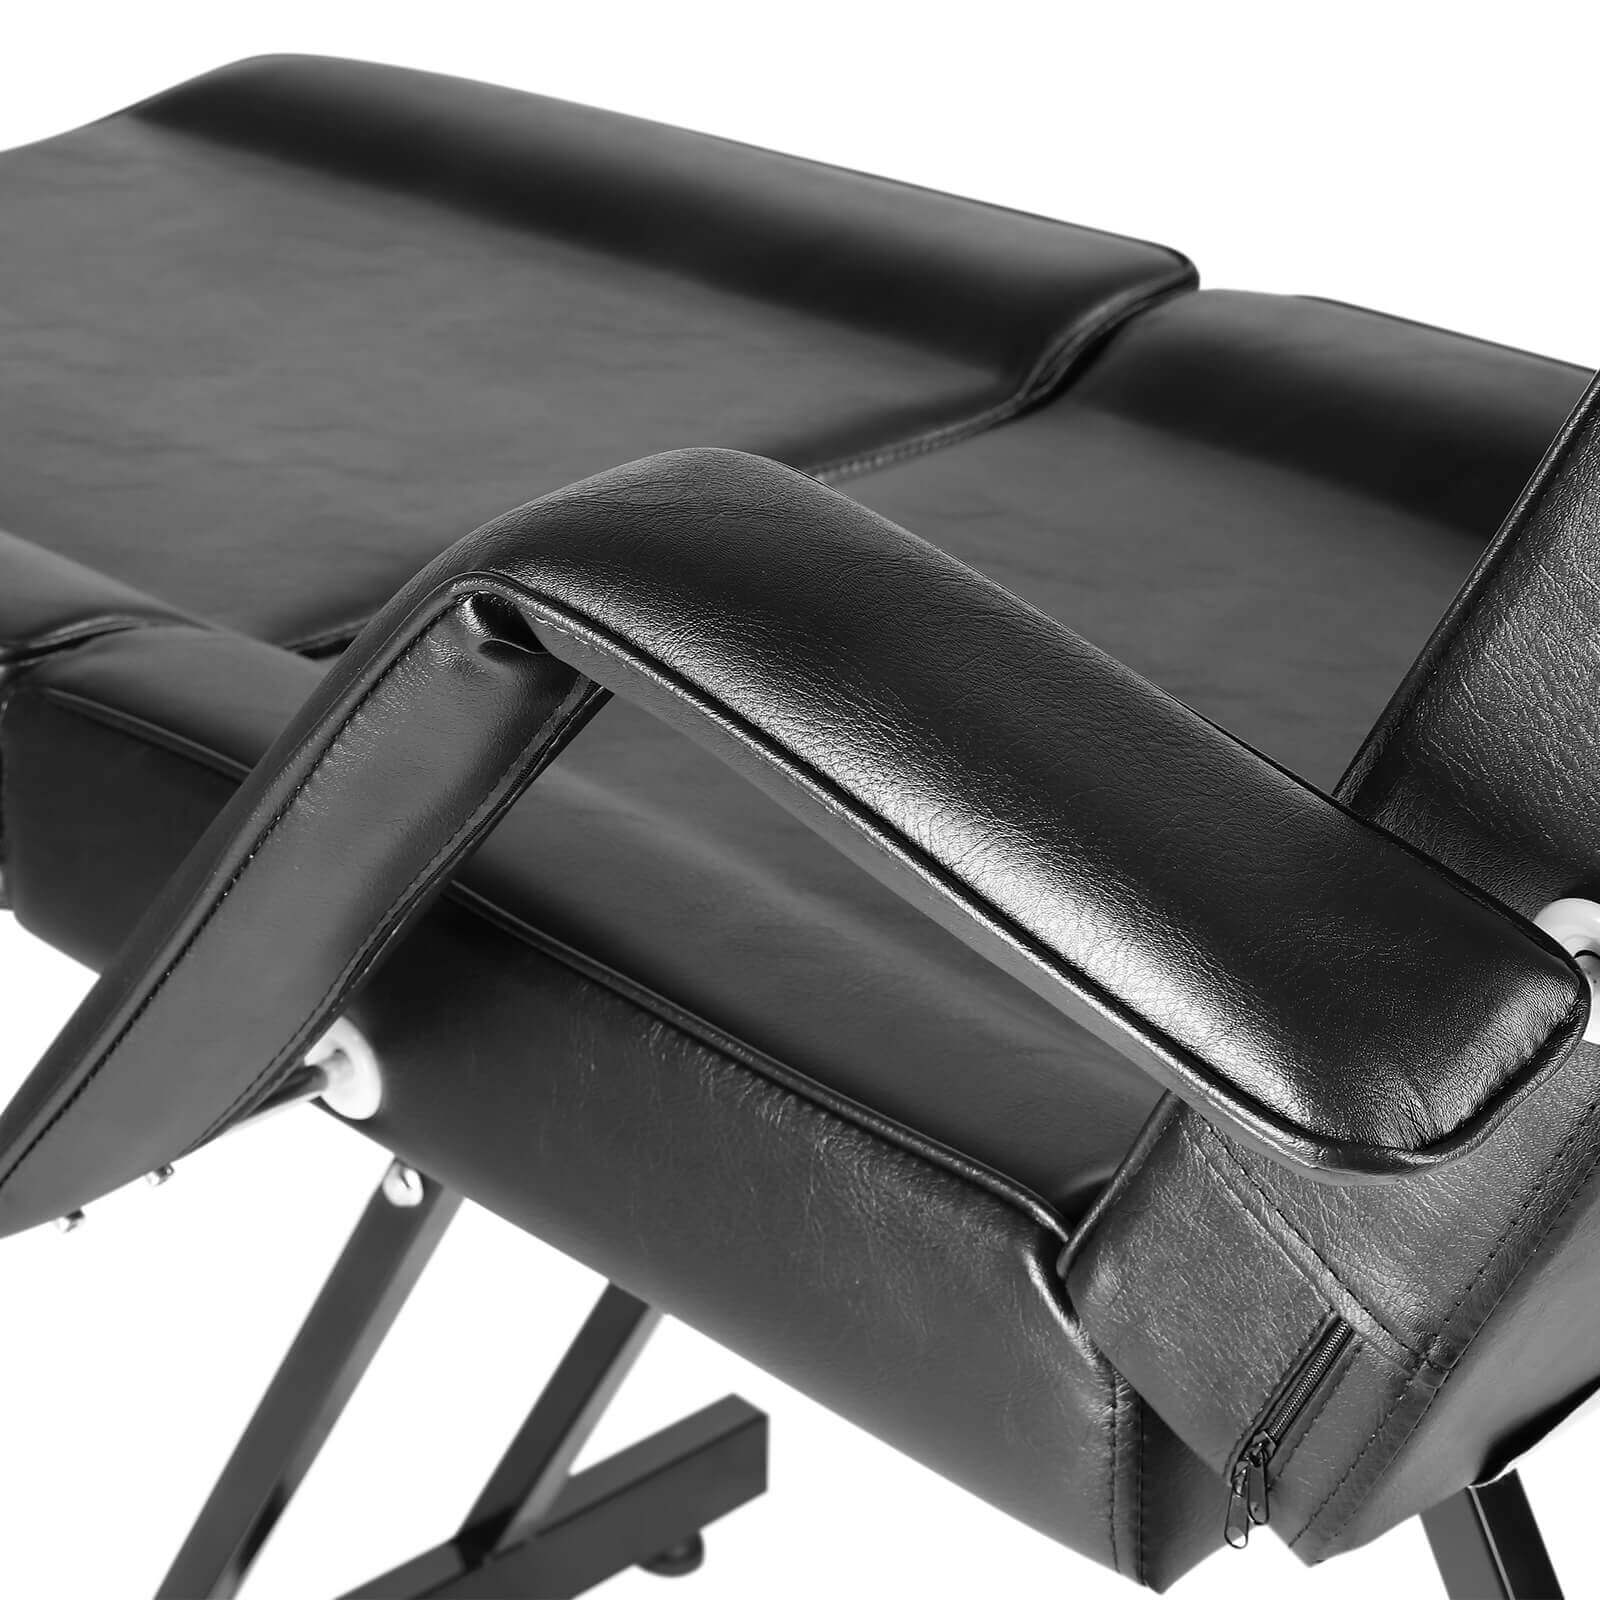 #2002 Massage Table Adjustable Massage Bed W/Free Stool